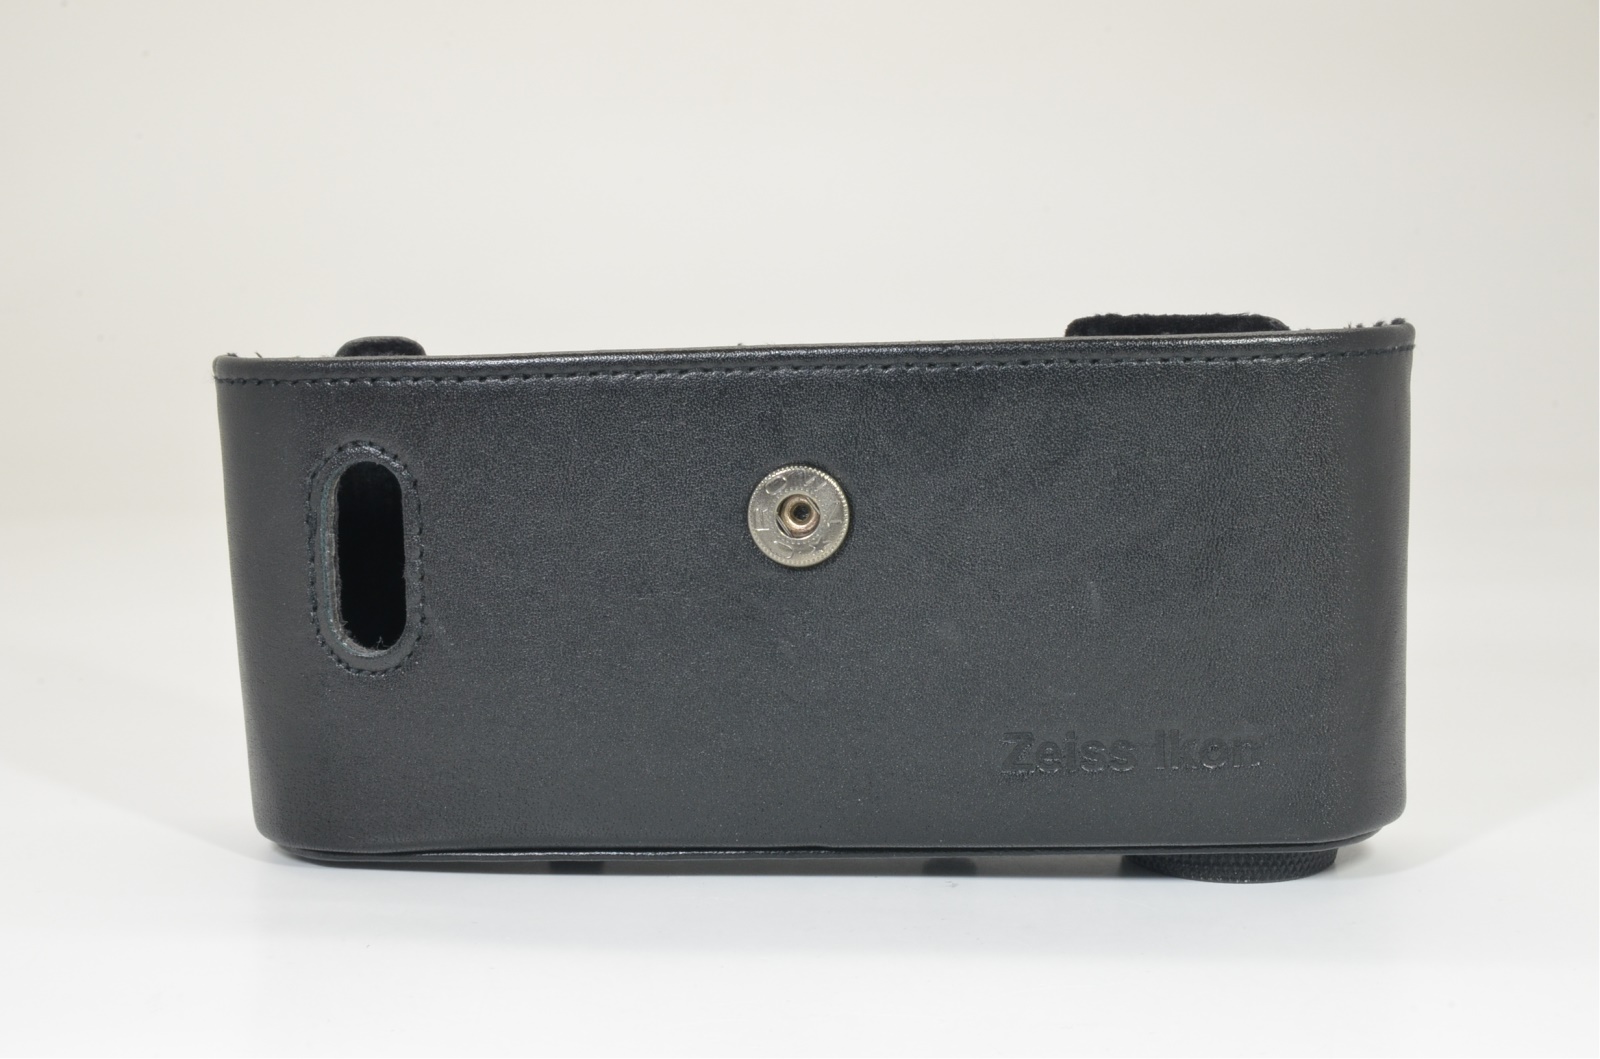 cosina zeiss ikon zm leather camera case semi-hard case from japan